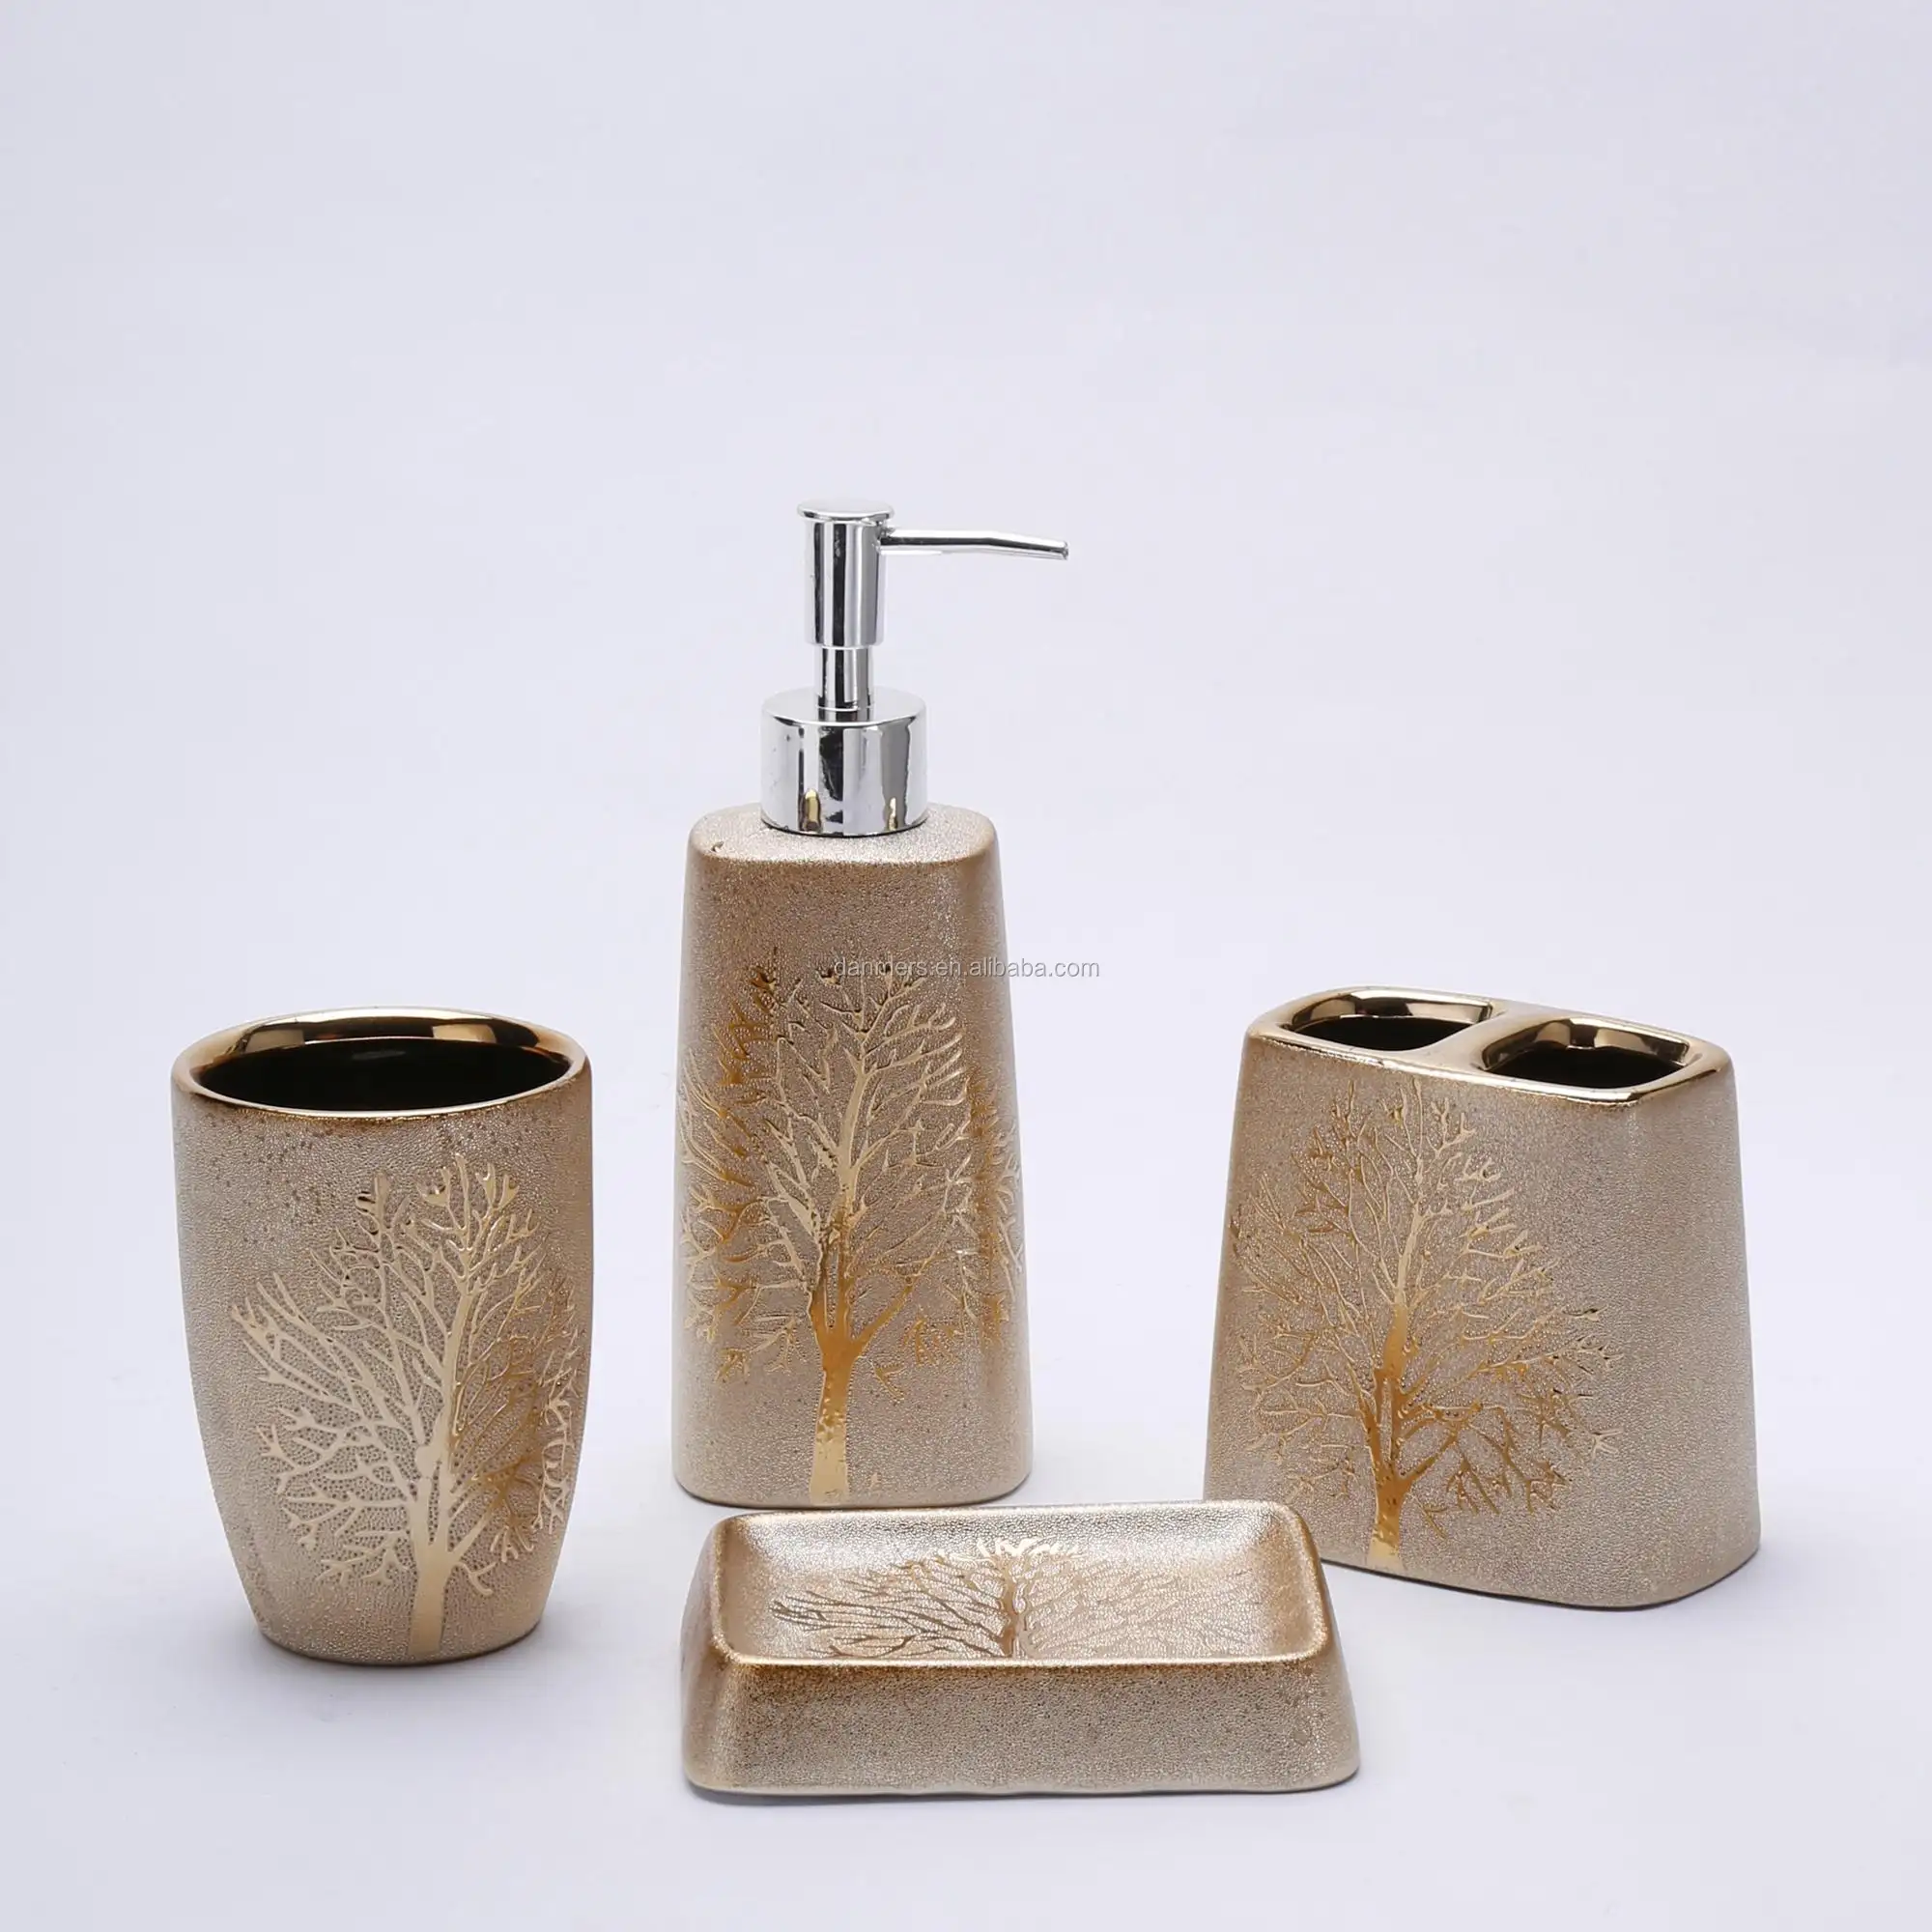 Royal elegant design ceramic bath sets gold electroplated chaozhou hotel home decor bathroom accessories set